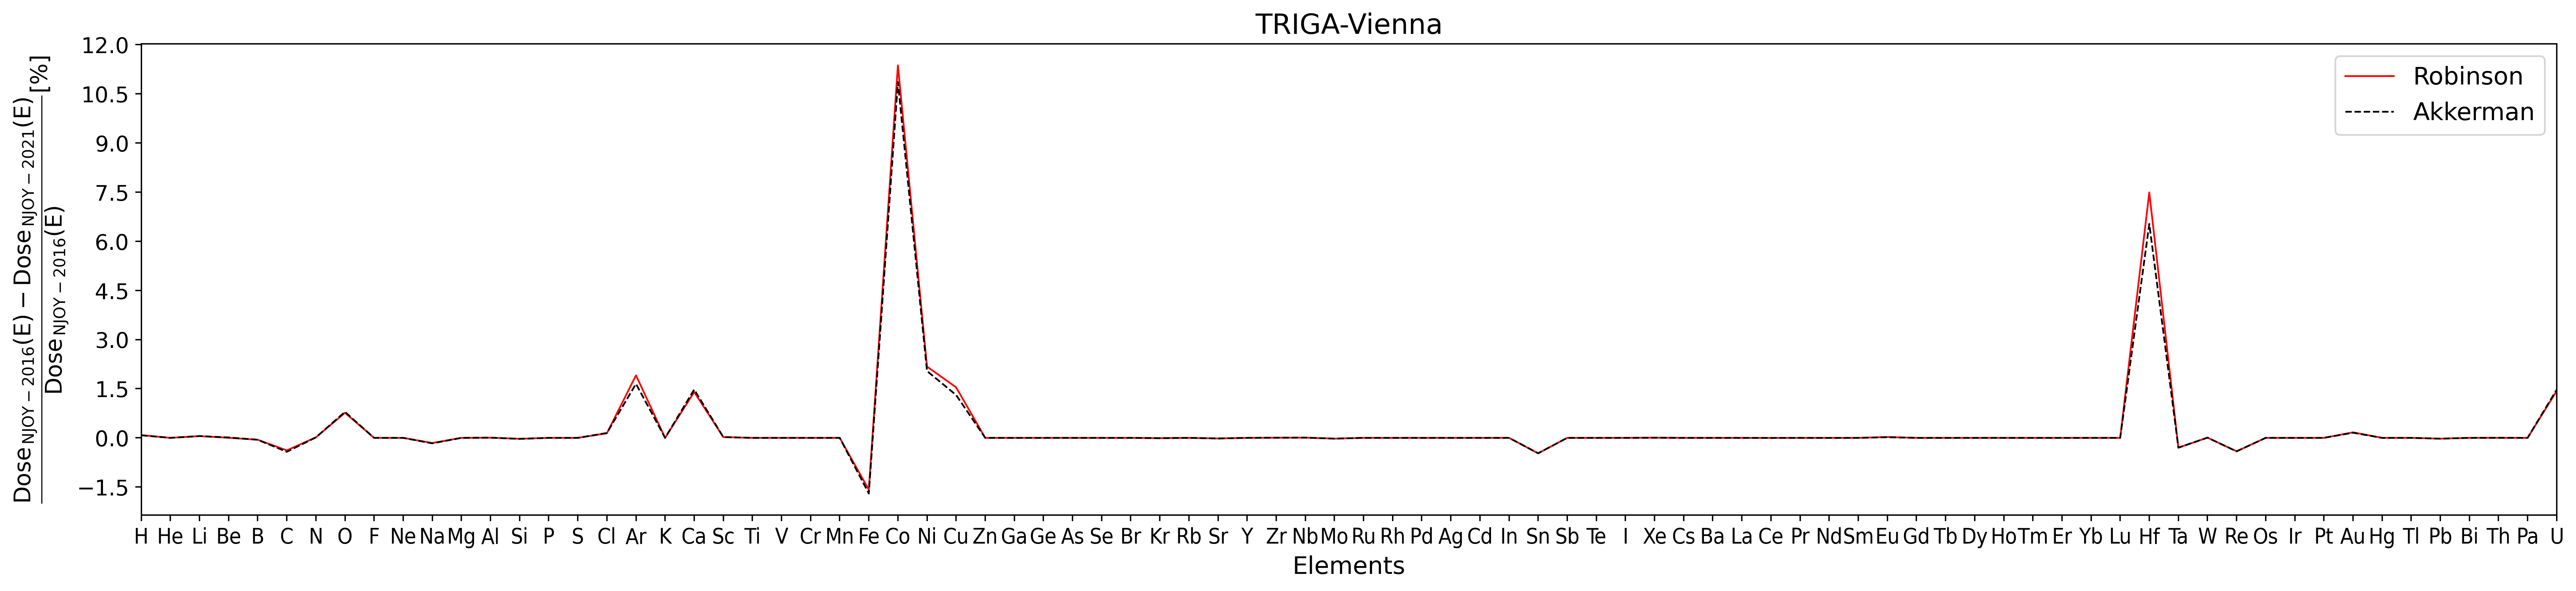 TRIGA VIENNA1